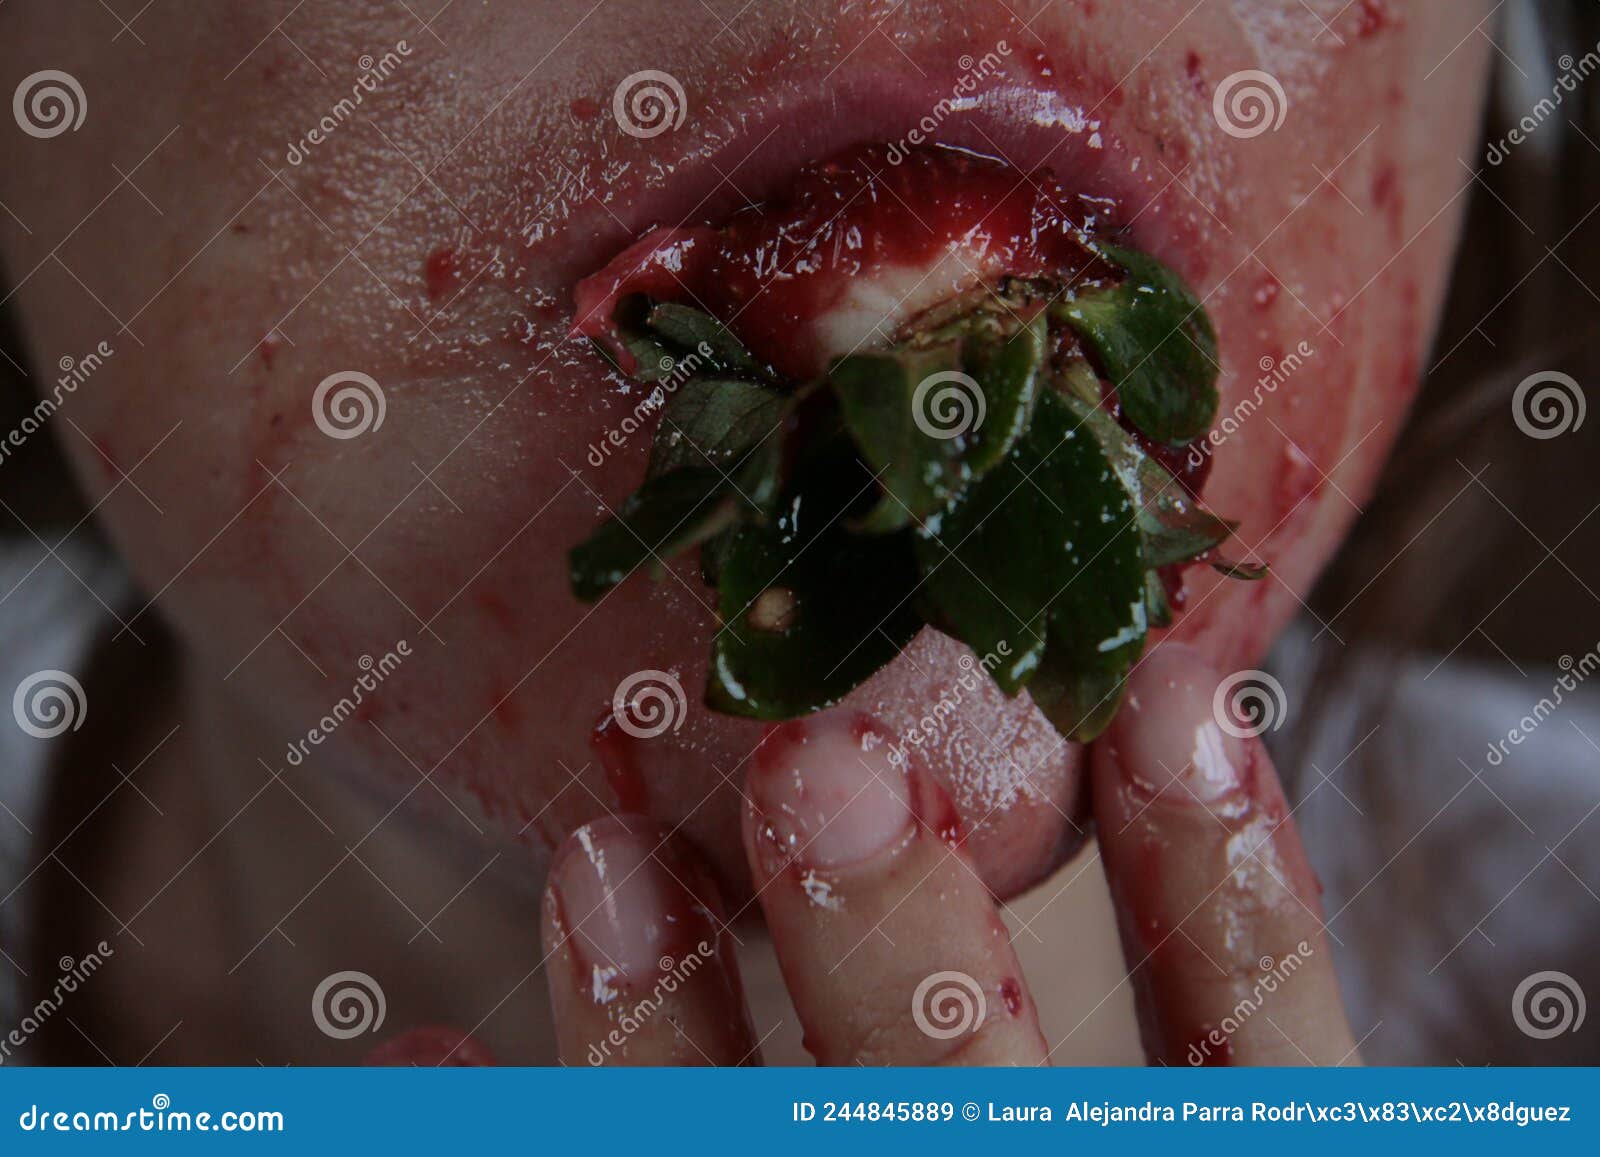 mashed strawberries on the mouth fresas machacadas en la boca